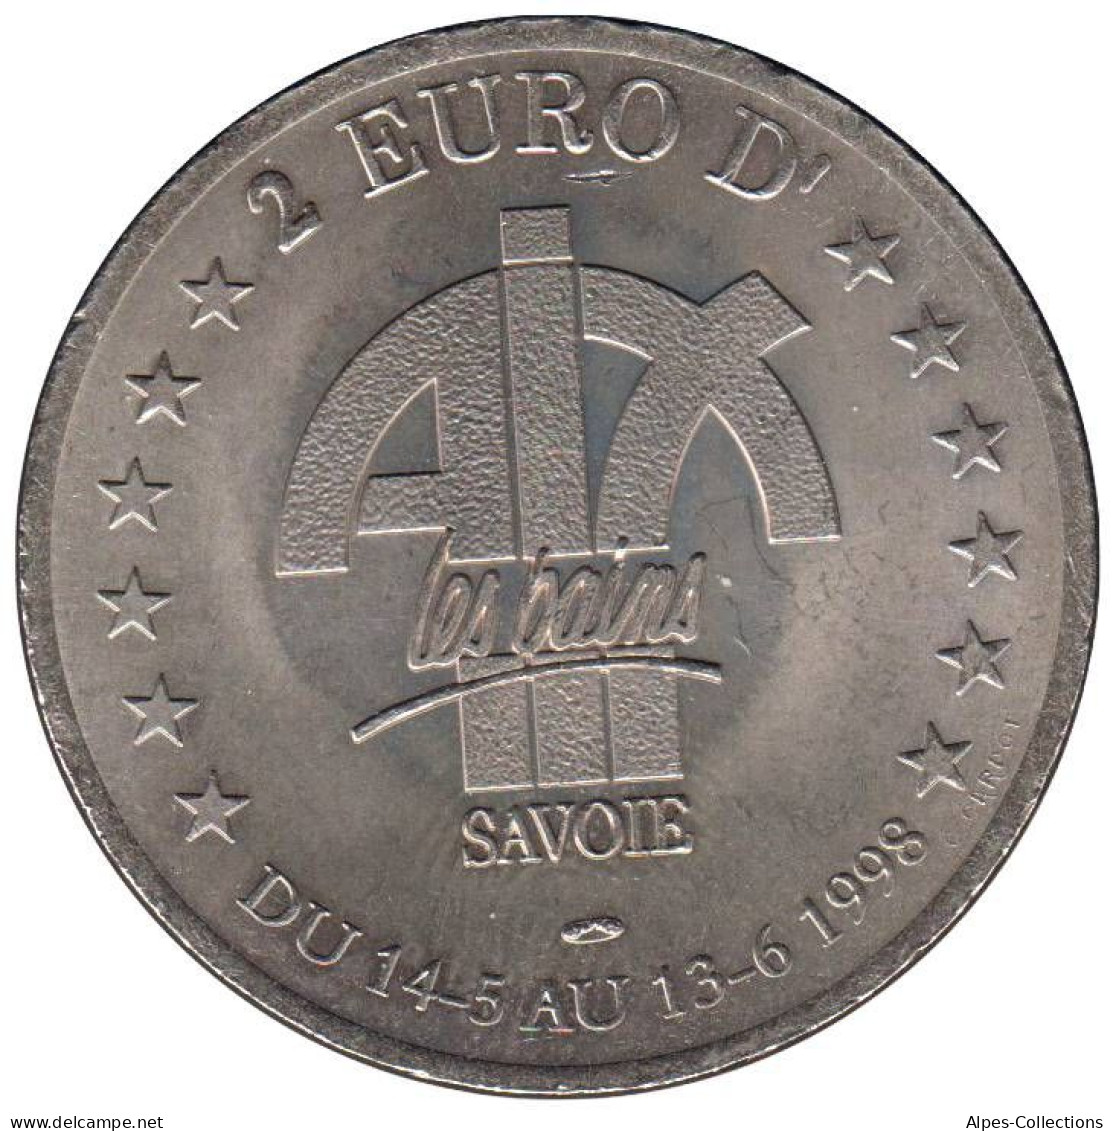 AIX LES BAINS - EU0020.3 - 2 EURO DES VILLES - Réf: T419 - 1998 - Euro Van De Steden